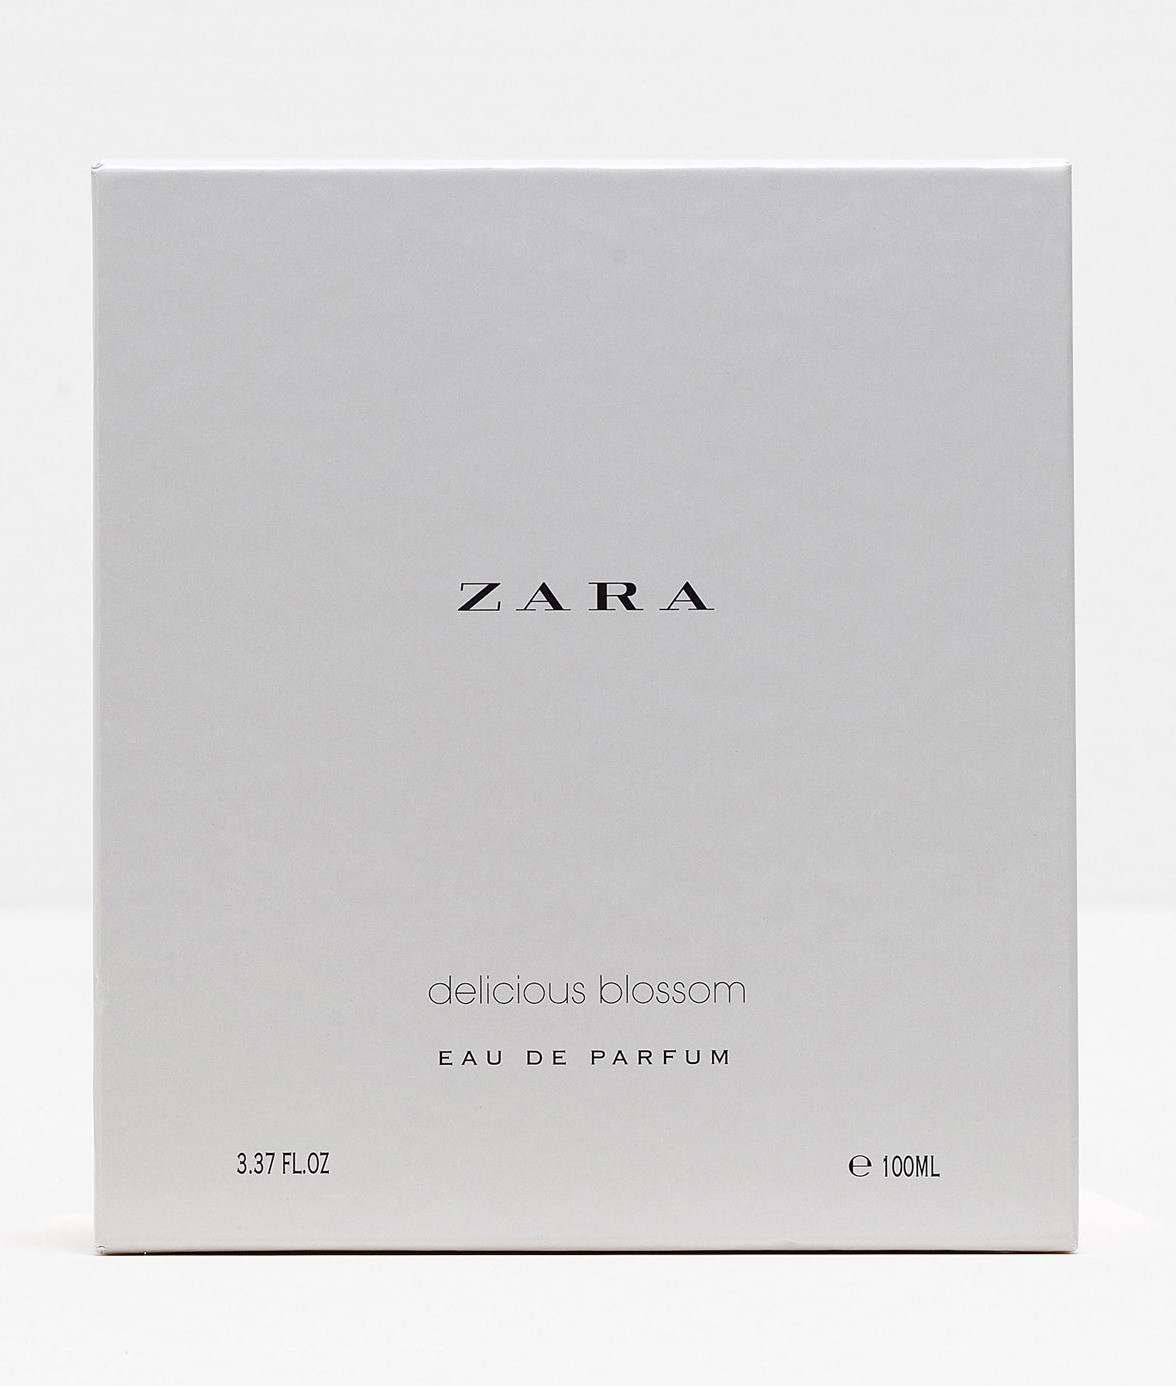 Delicious Blossom Zara perfume - a 